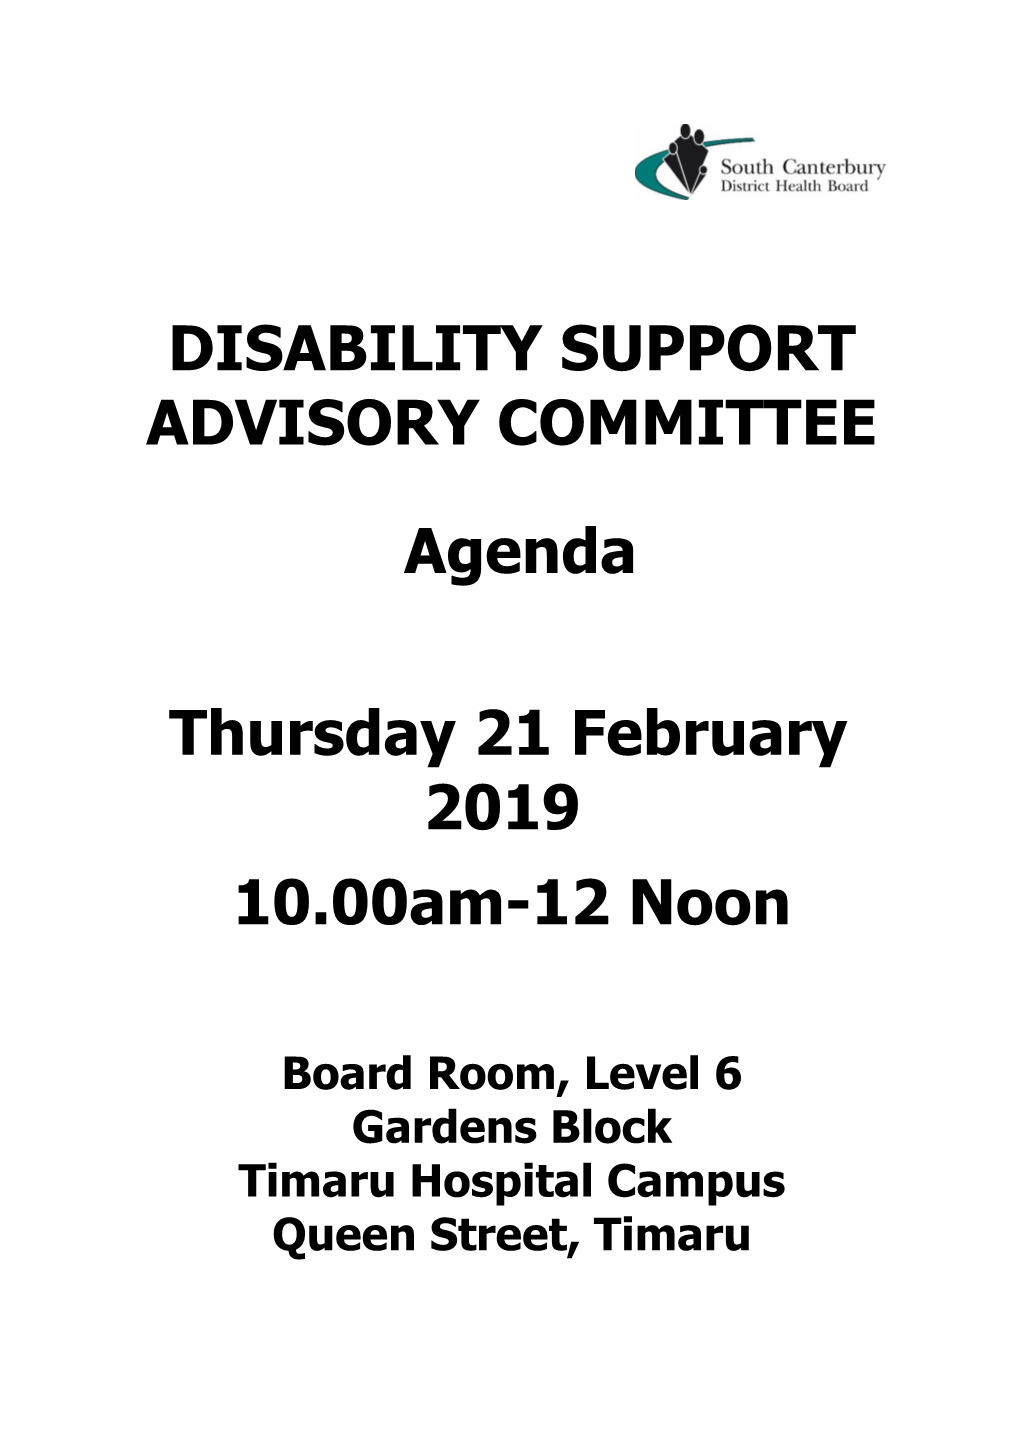 DISABILITY SUPPORT ADVISORY COMMITTEE Agenda Thursday 21